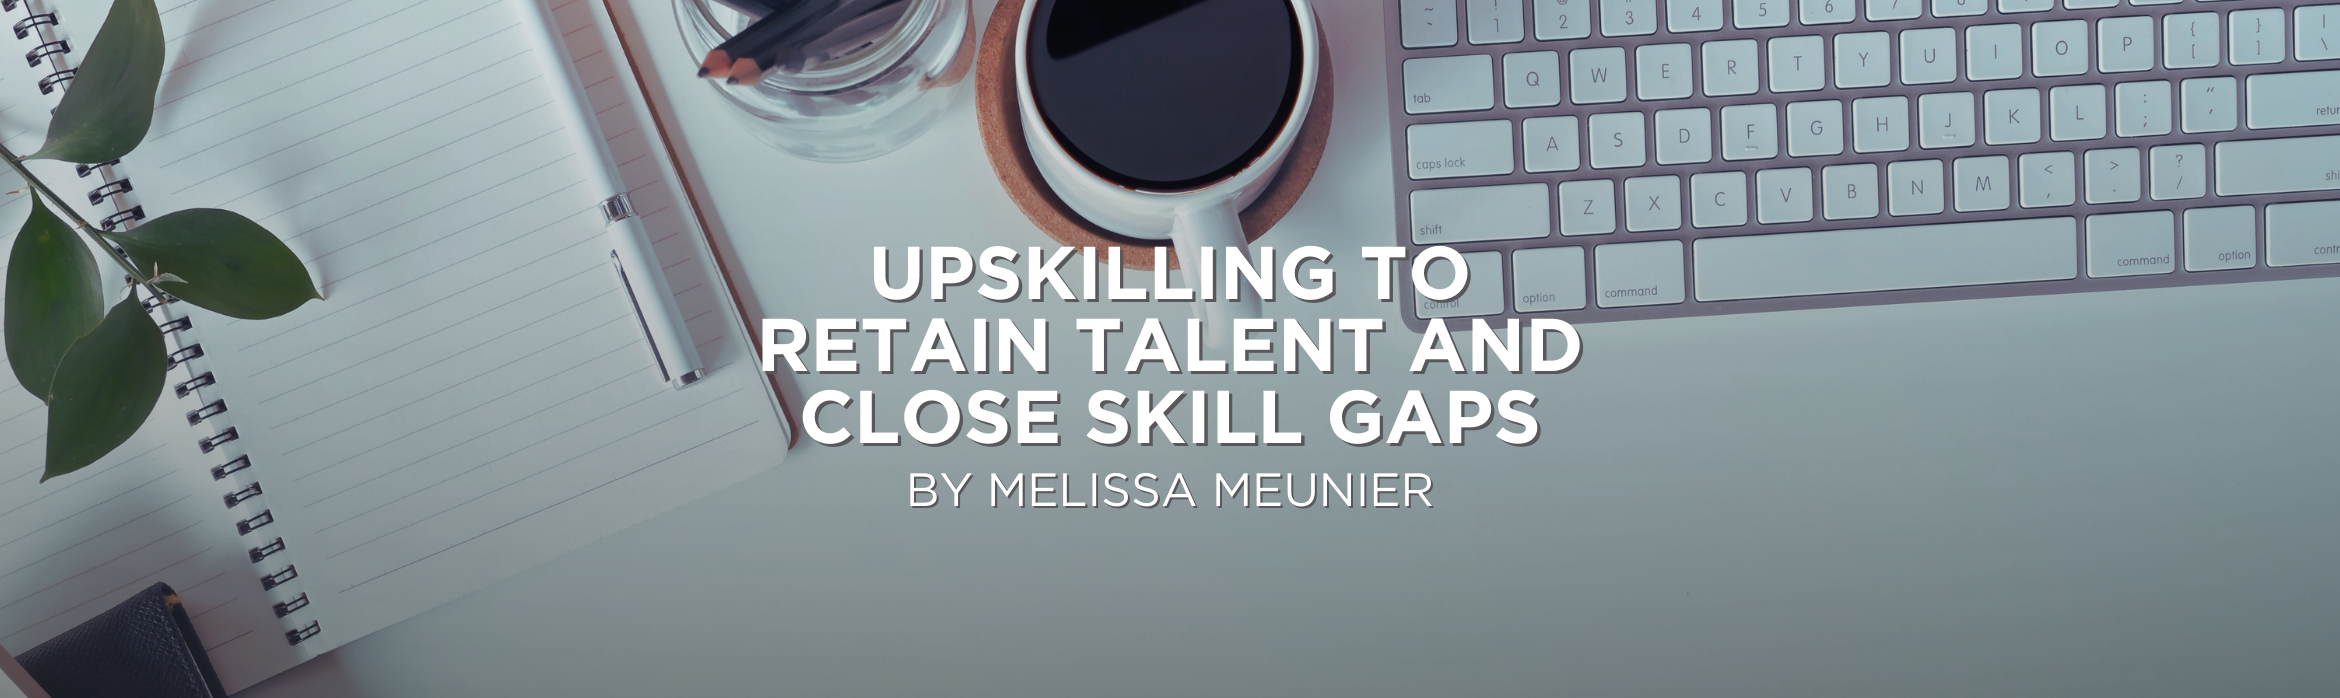 Upskilling to Retain Talent and Close Skill Gaps